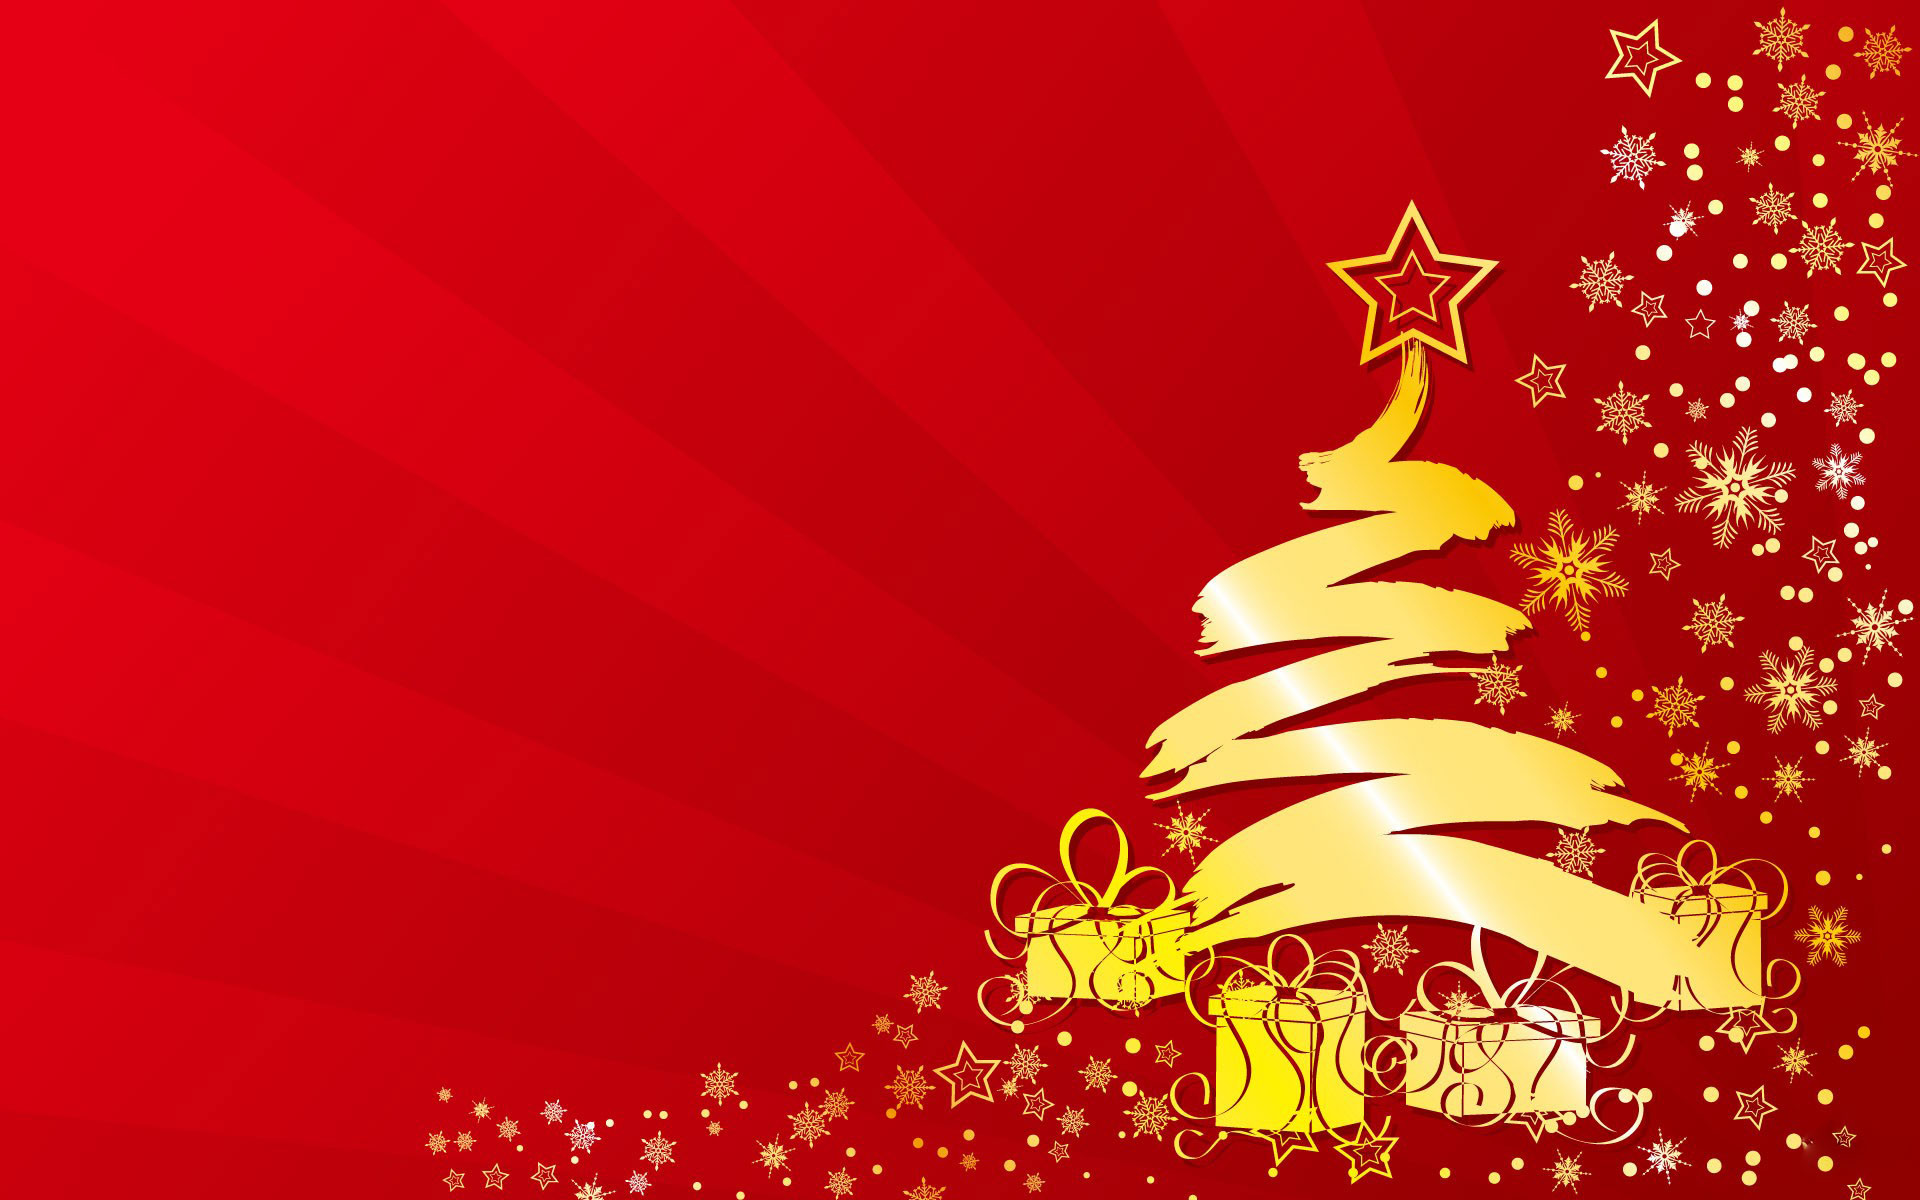 1920x1200 'best-tree-background-wallpaper-christmas-desktop-22740.jpg'